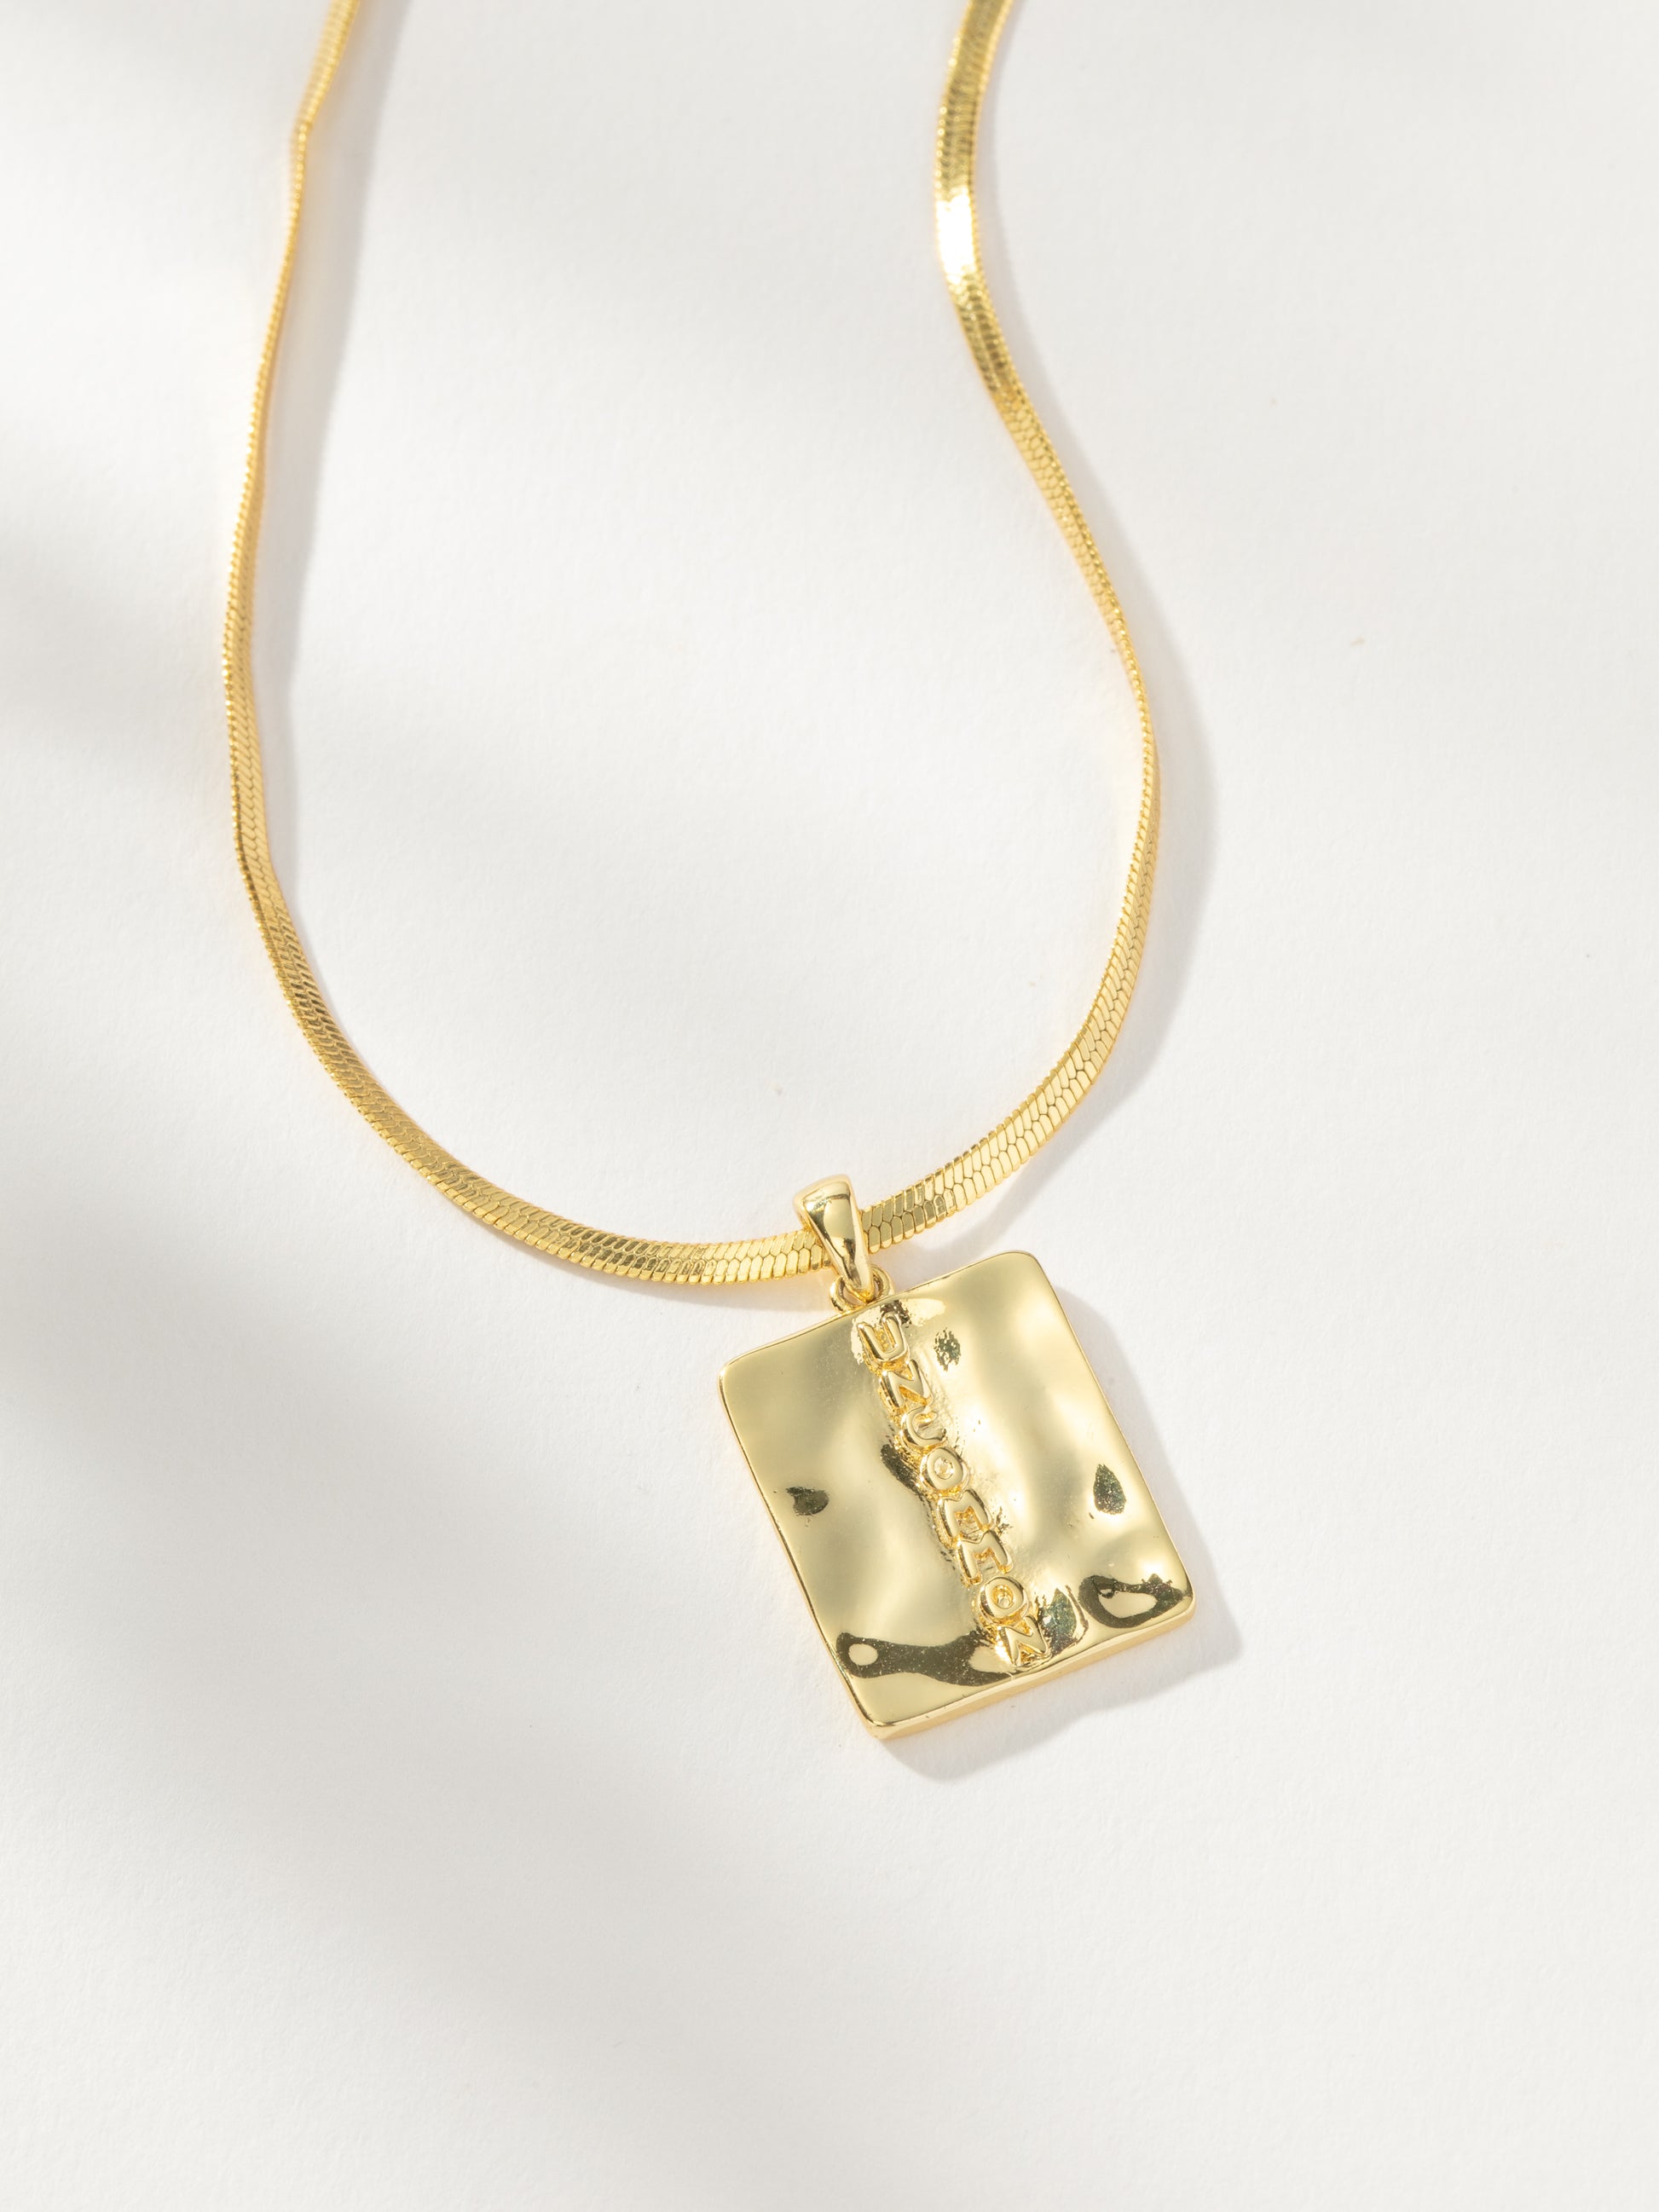 Uncommon Pendant Necklace | Gold | Product Detail Image | Uncommon James